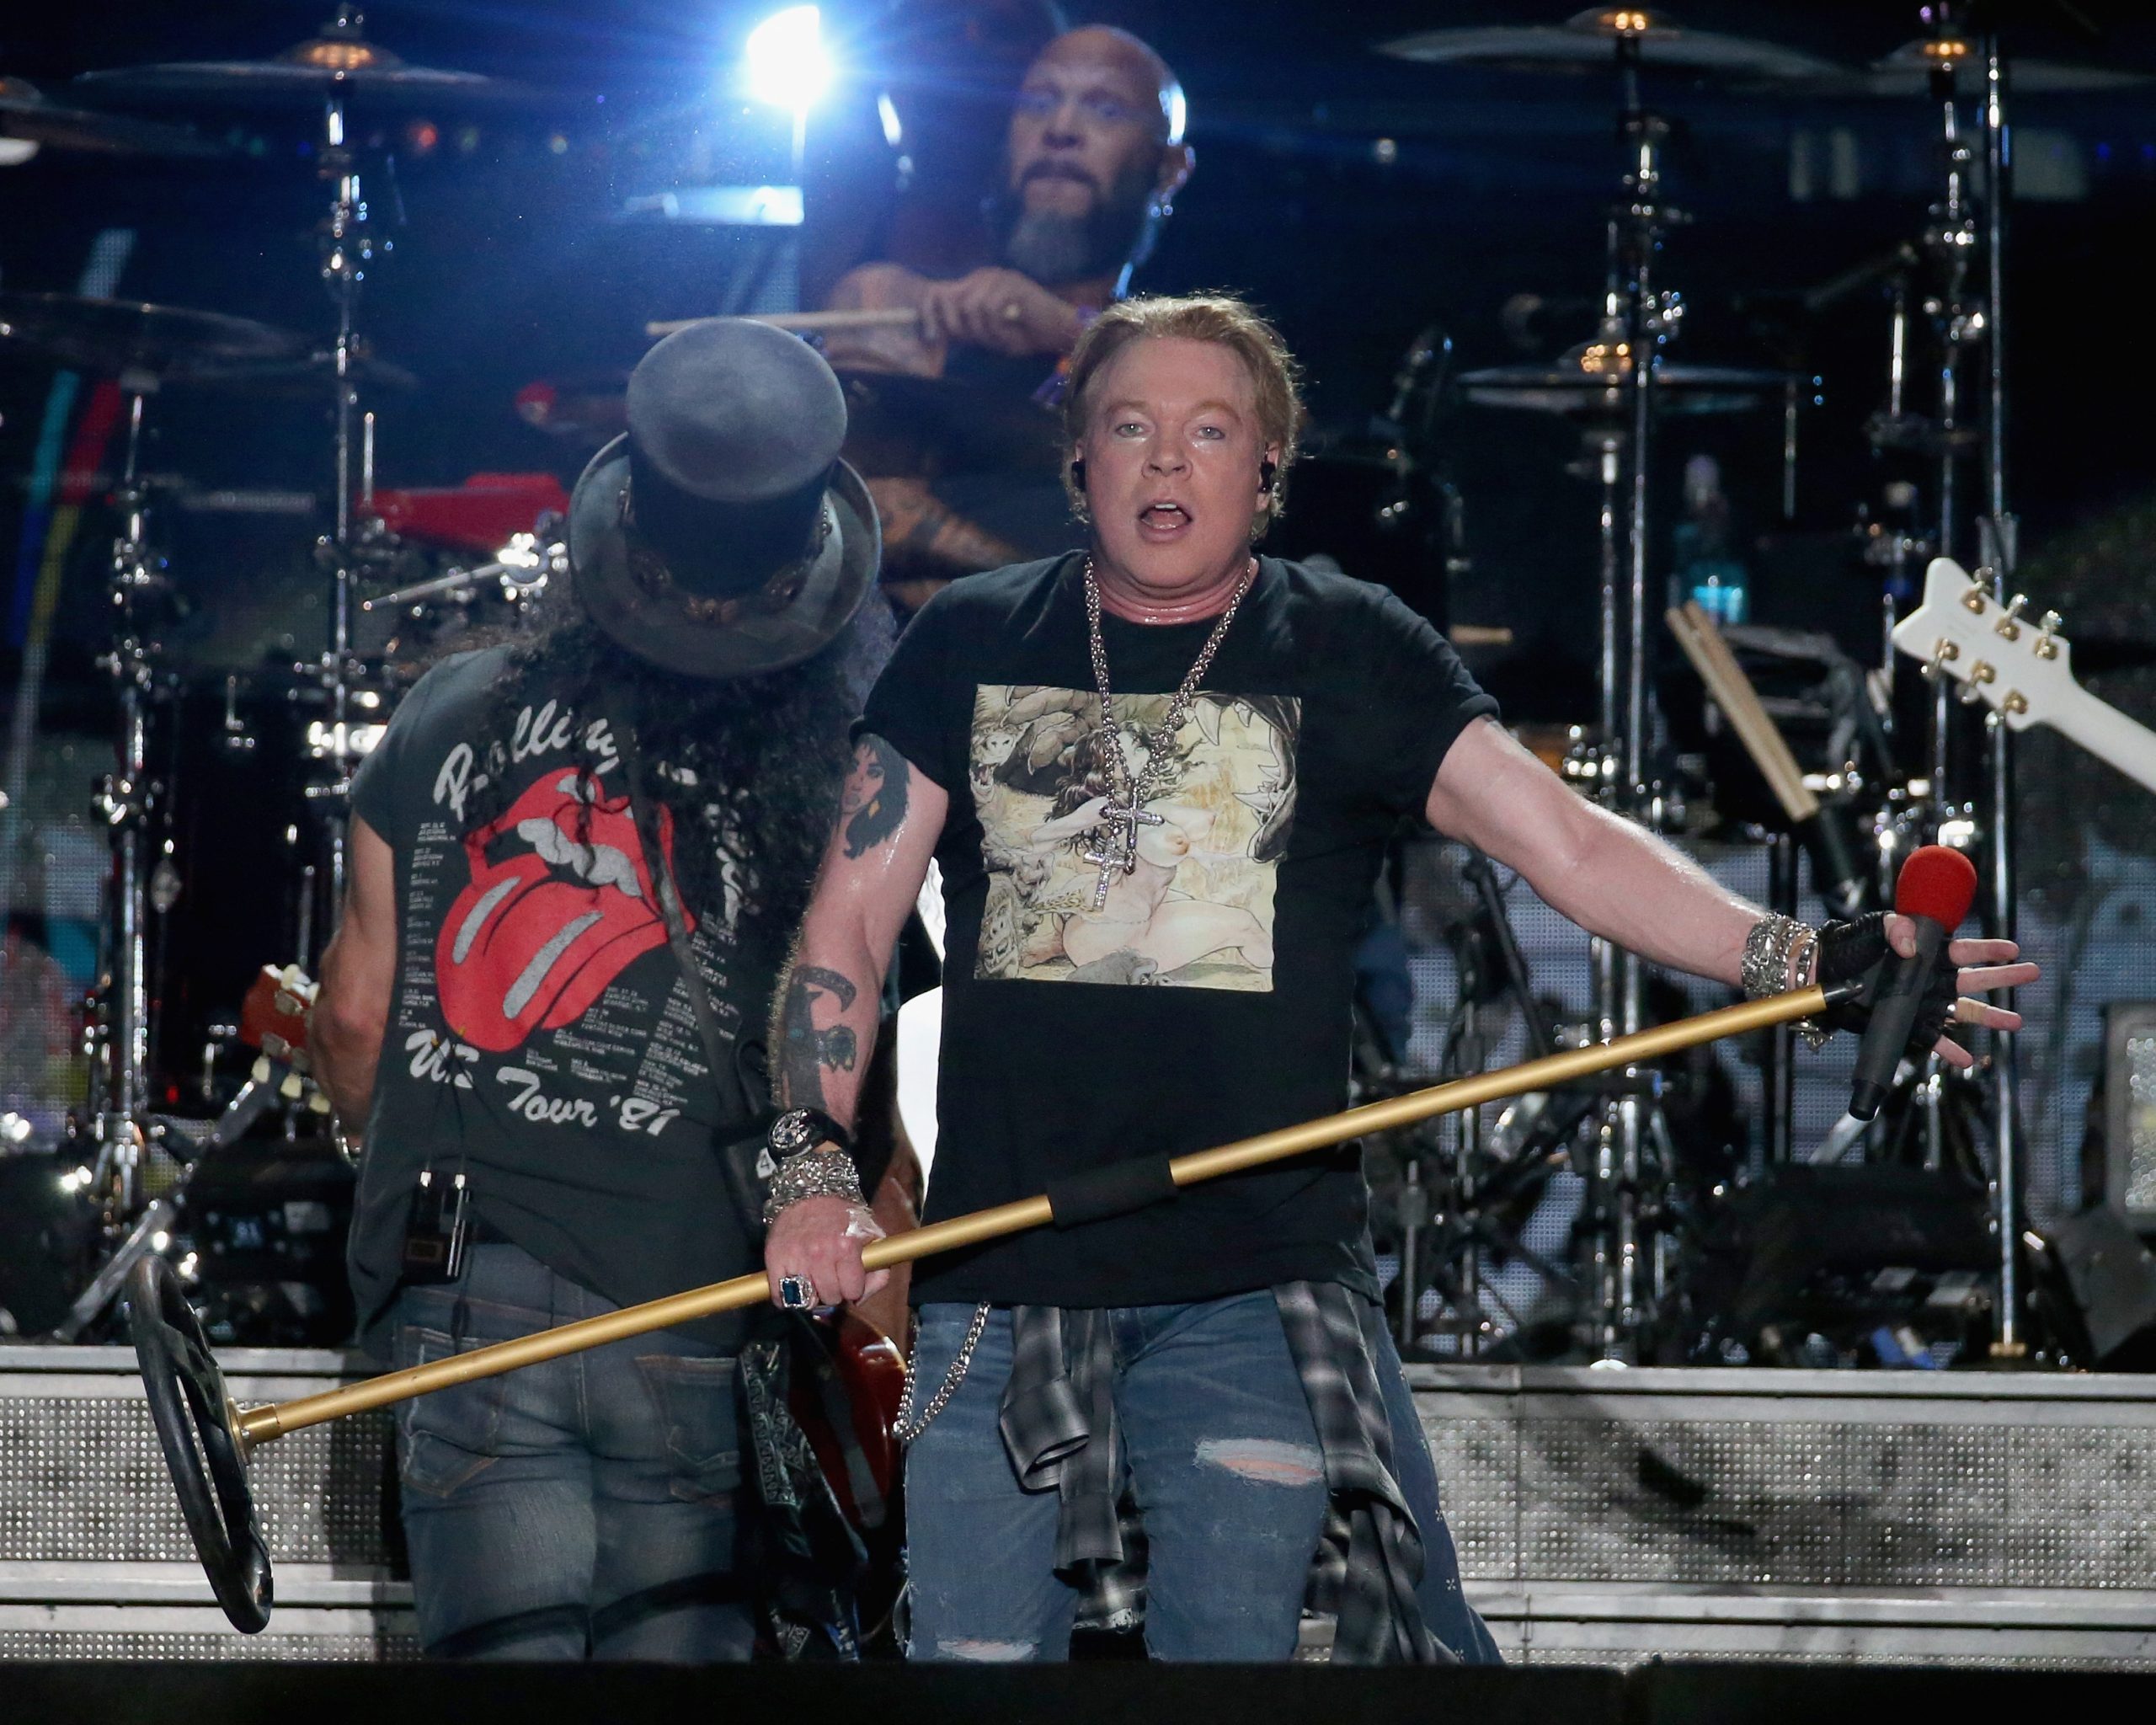 Baia baia: Gobierno de Yucatán afirma que concierto de Guns N' Roses no está autorizado